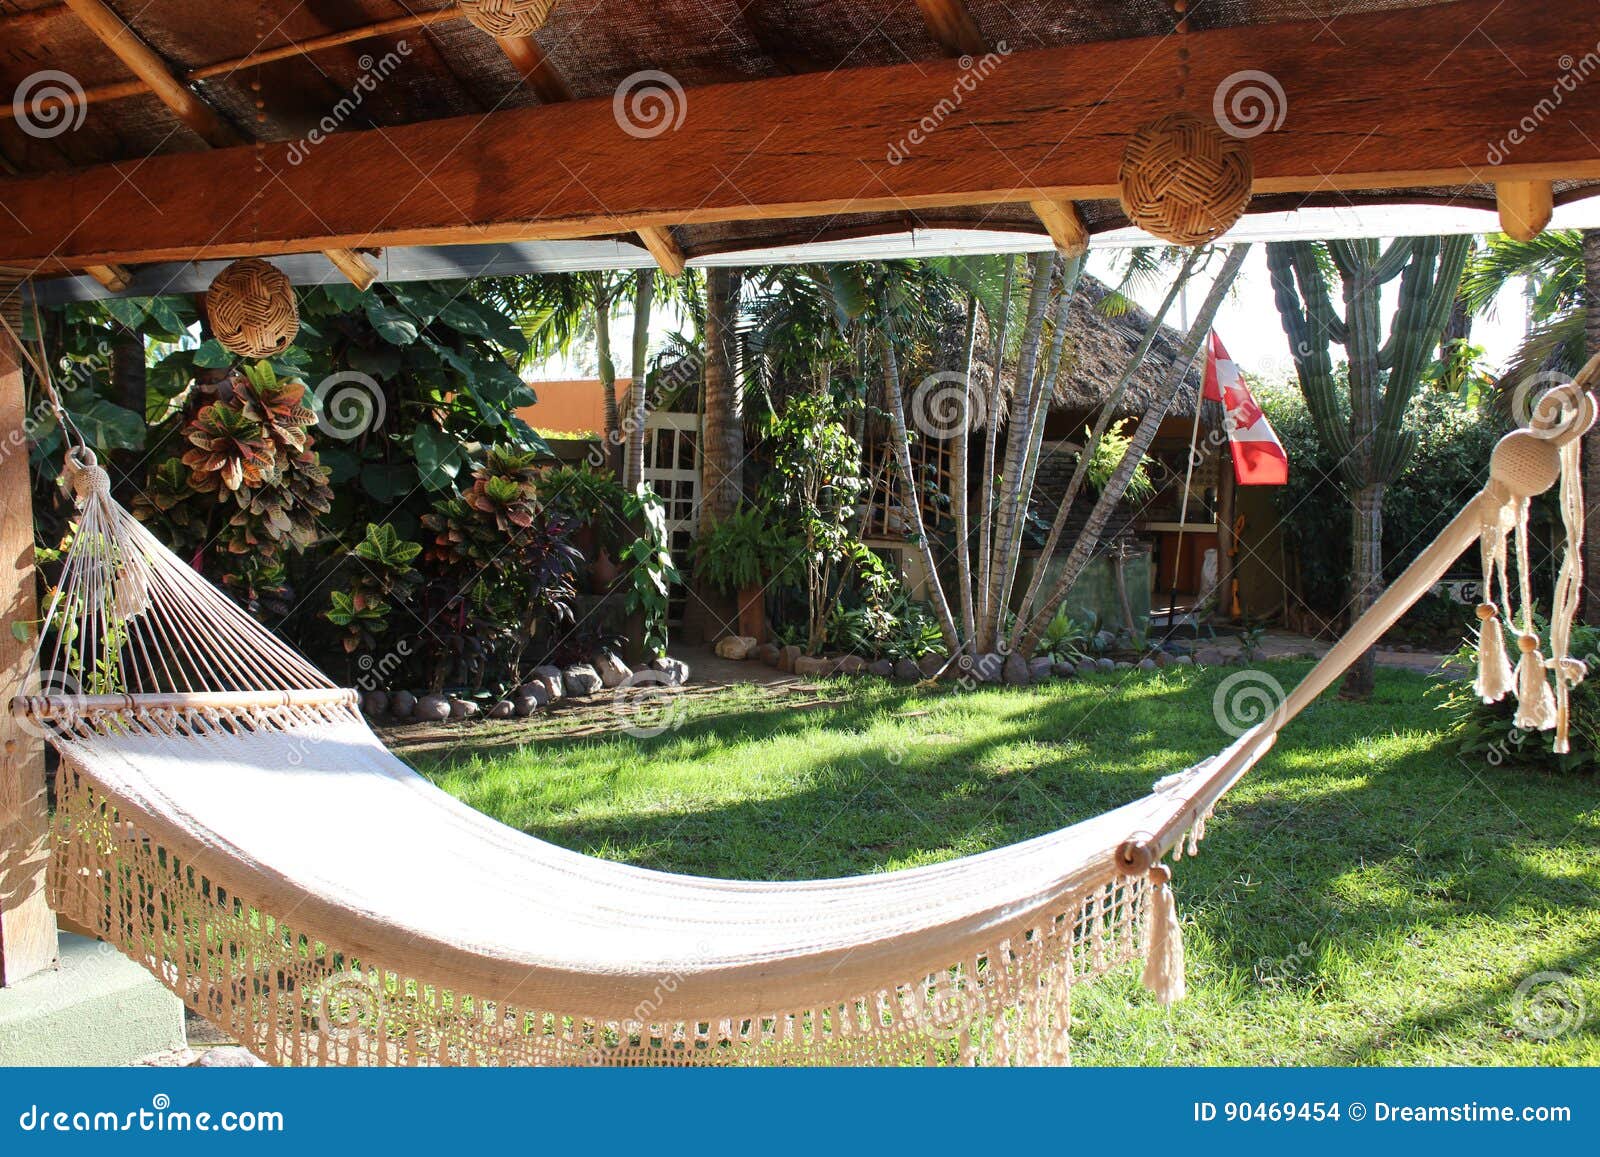 laidback hammock